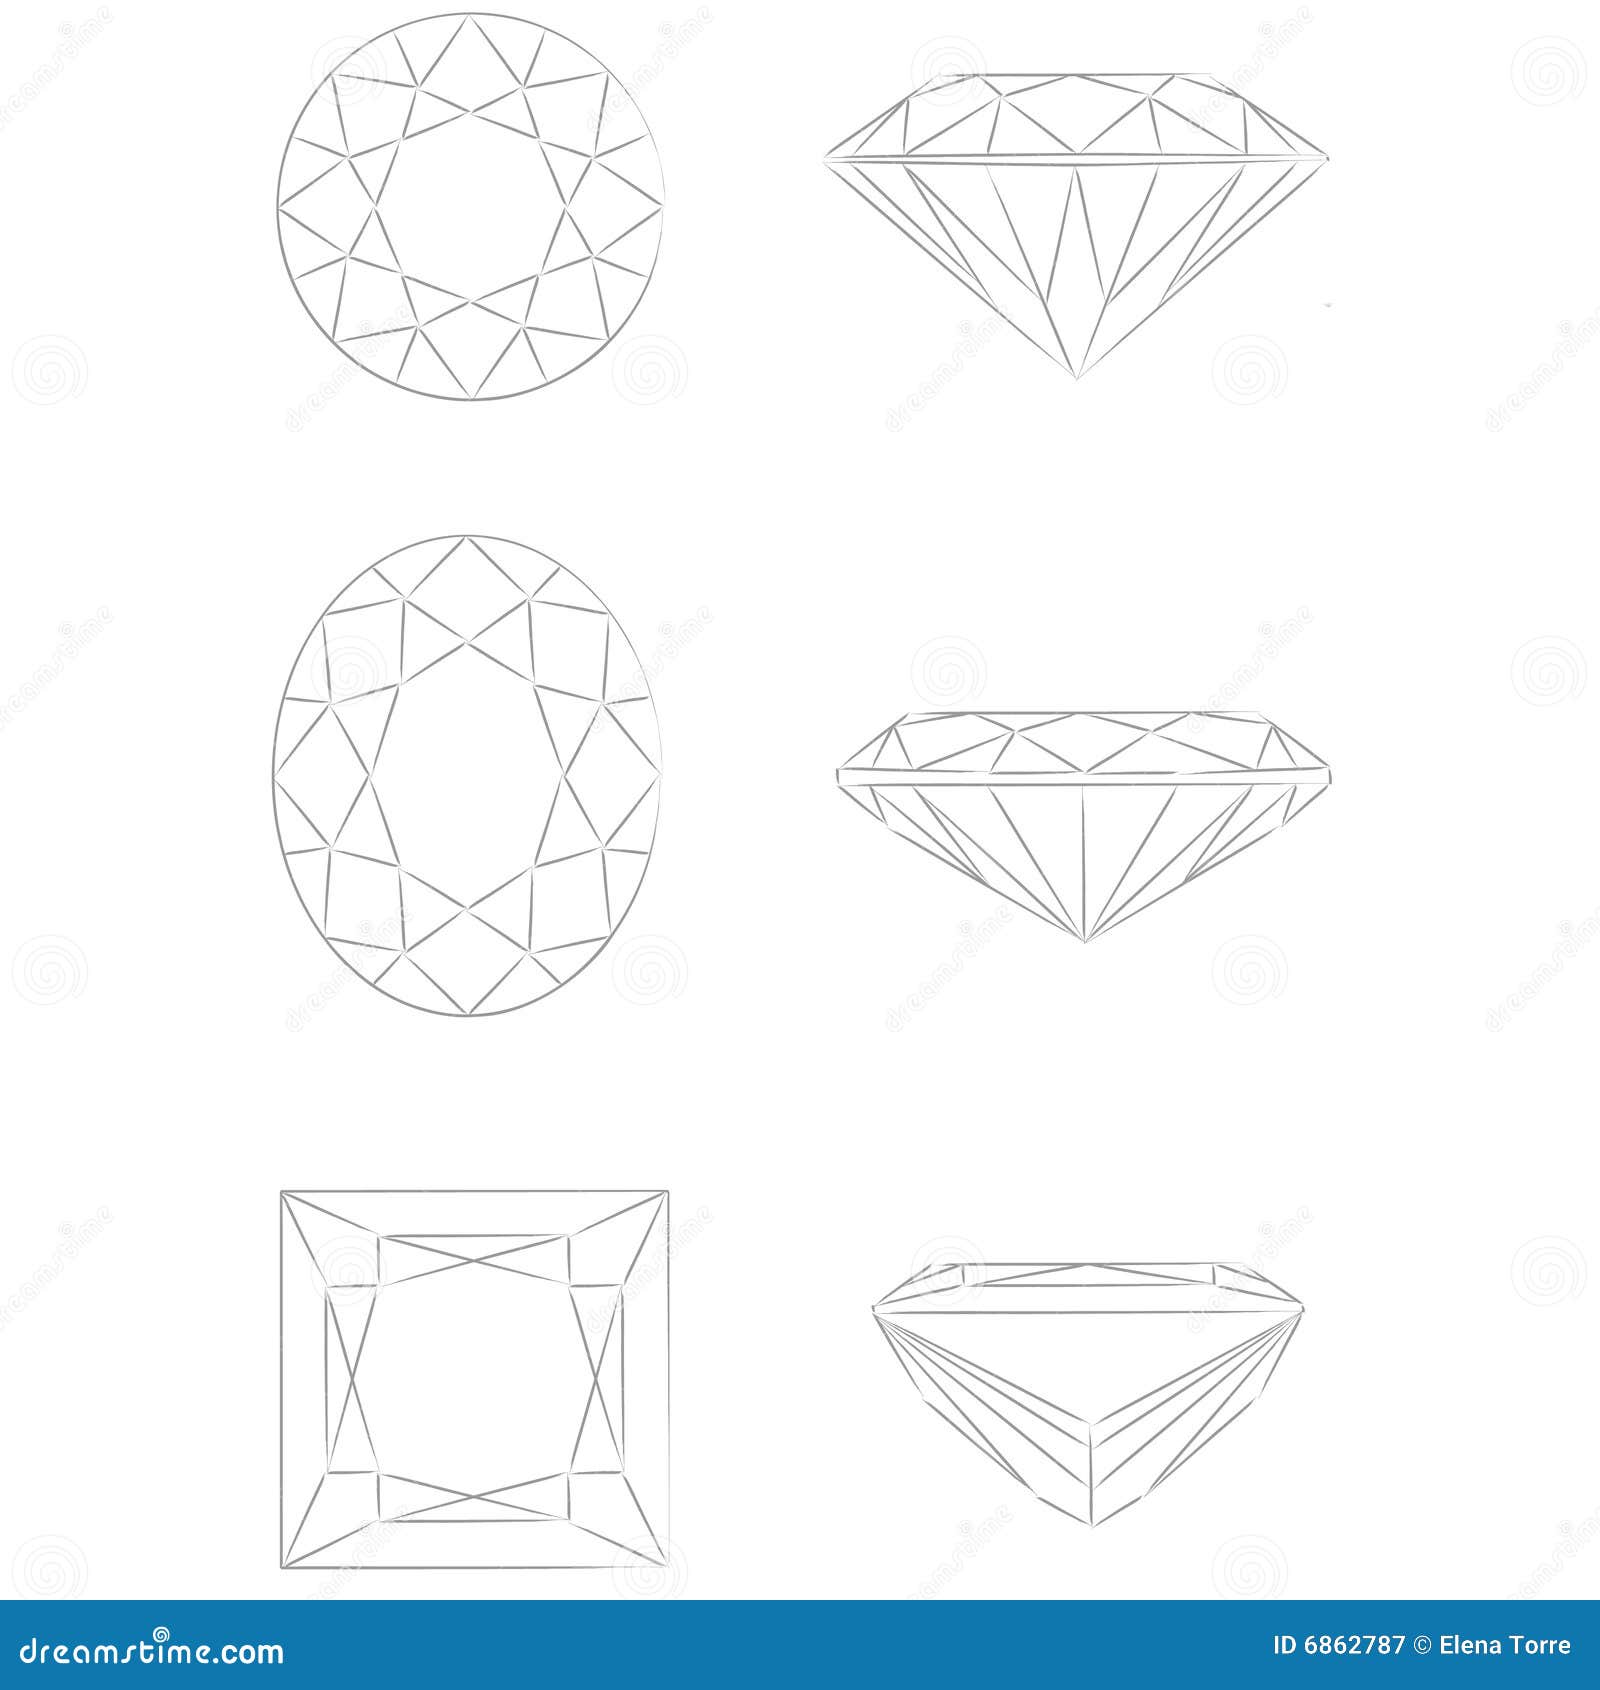 diamond s : round brilliant - oval - pr